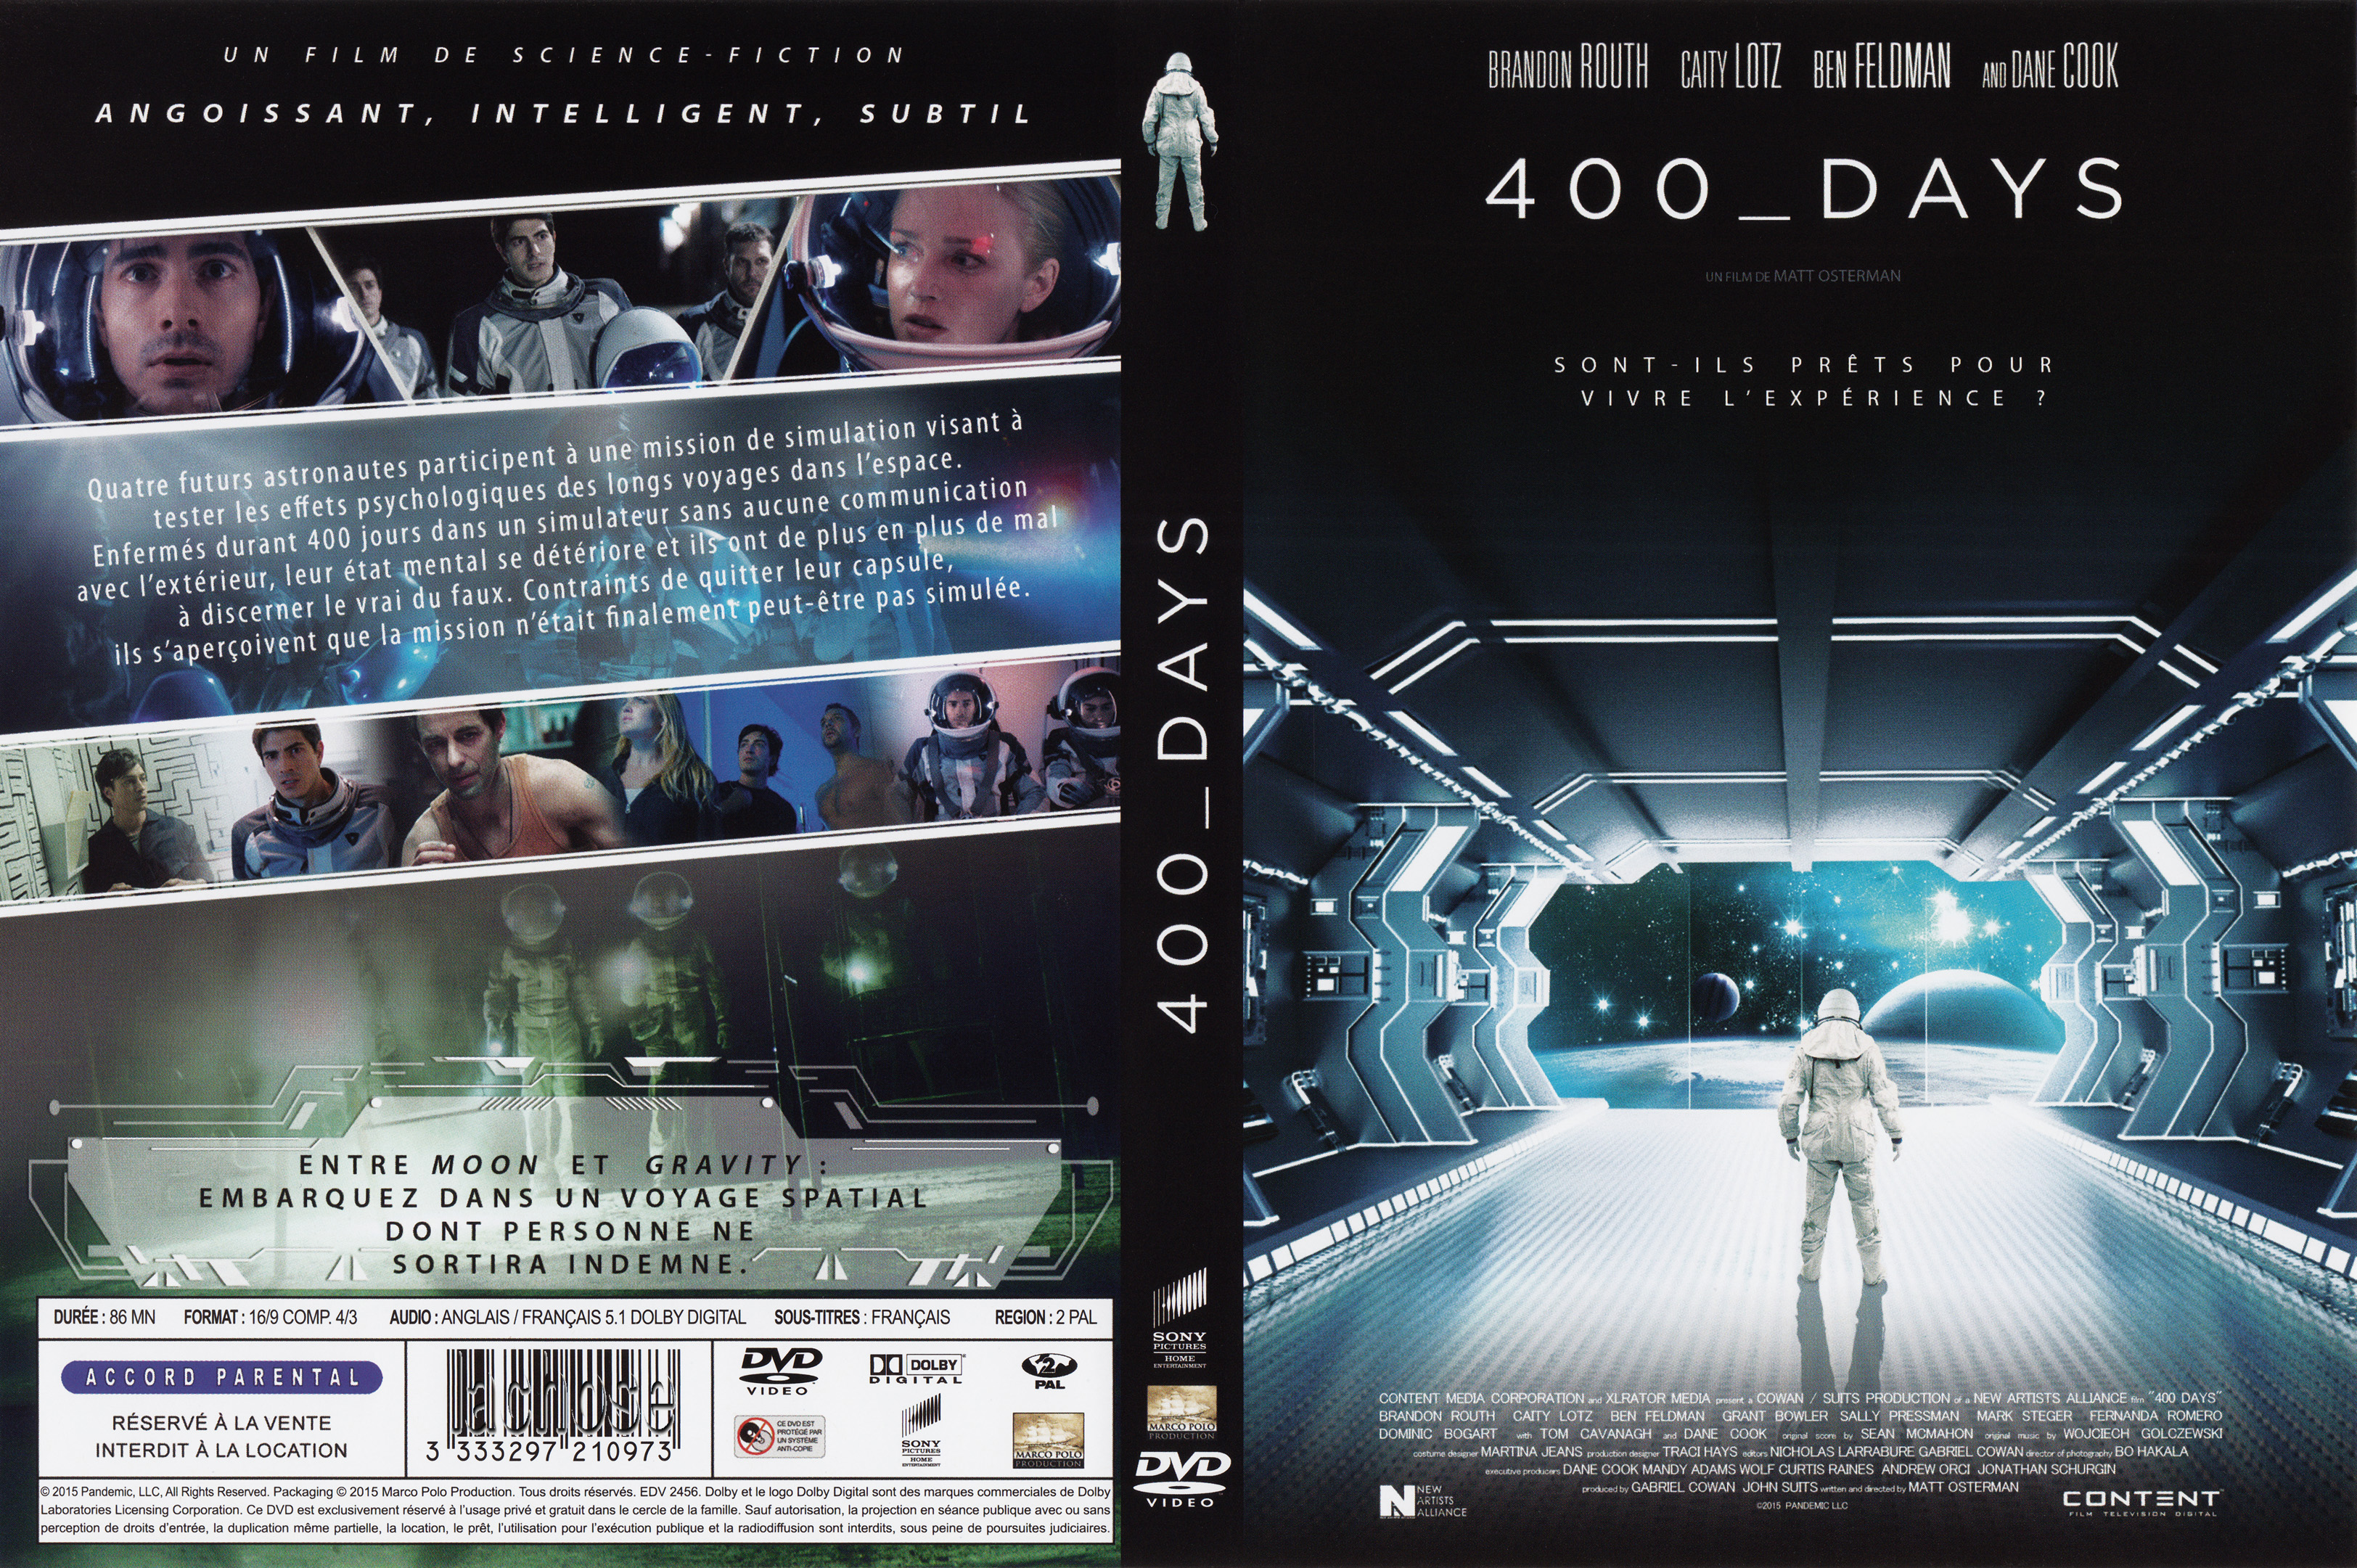 Jaquette DVD 400 days